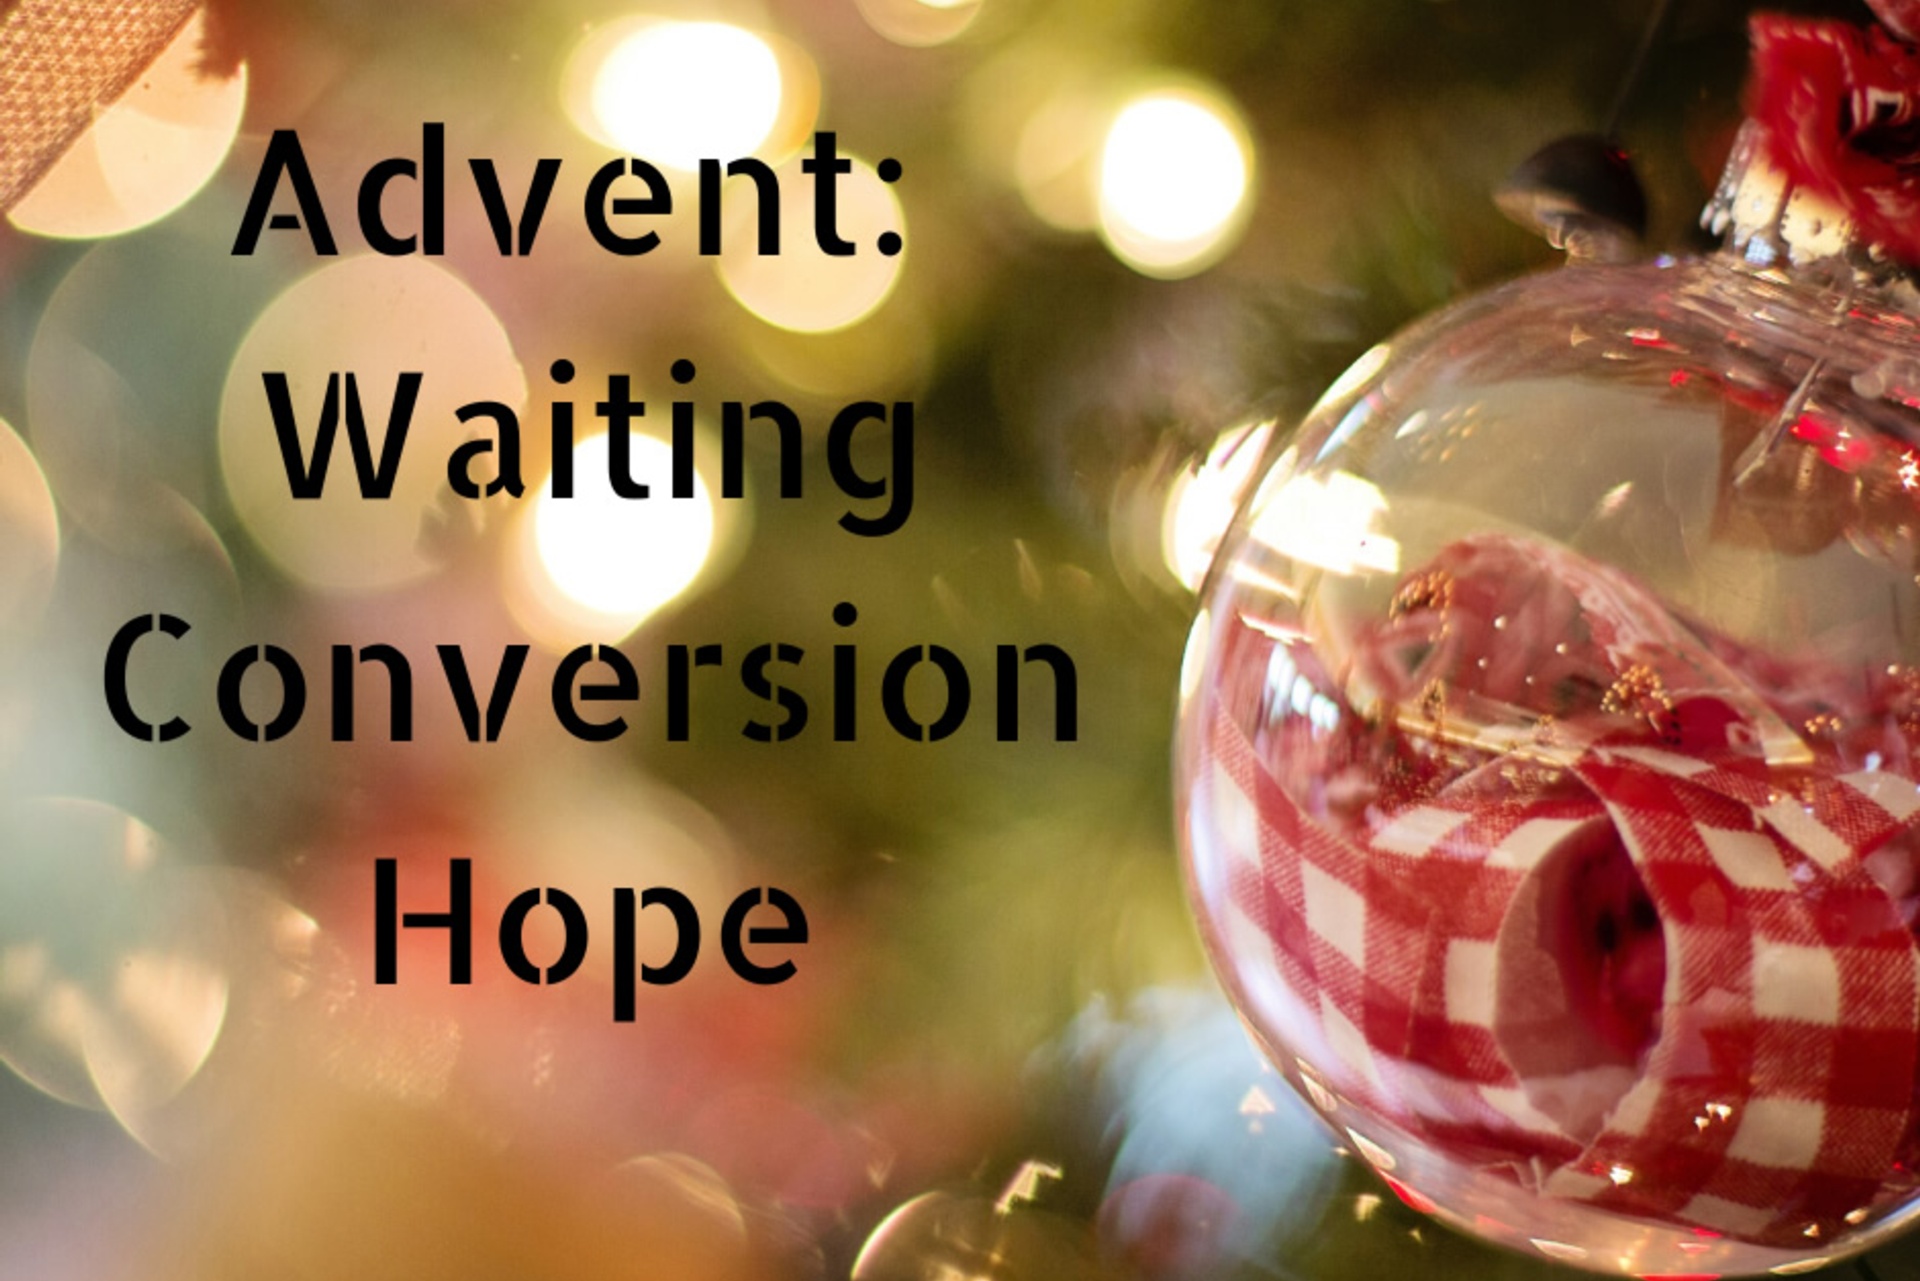 Day 8: Sunday 8 December 2019 – Second Sunday of Advent